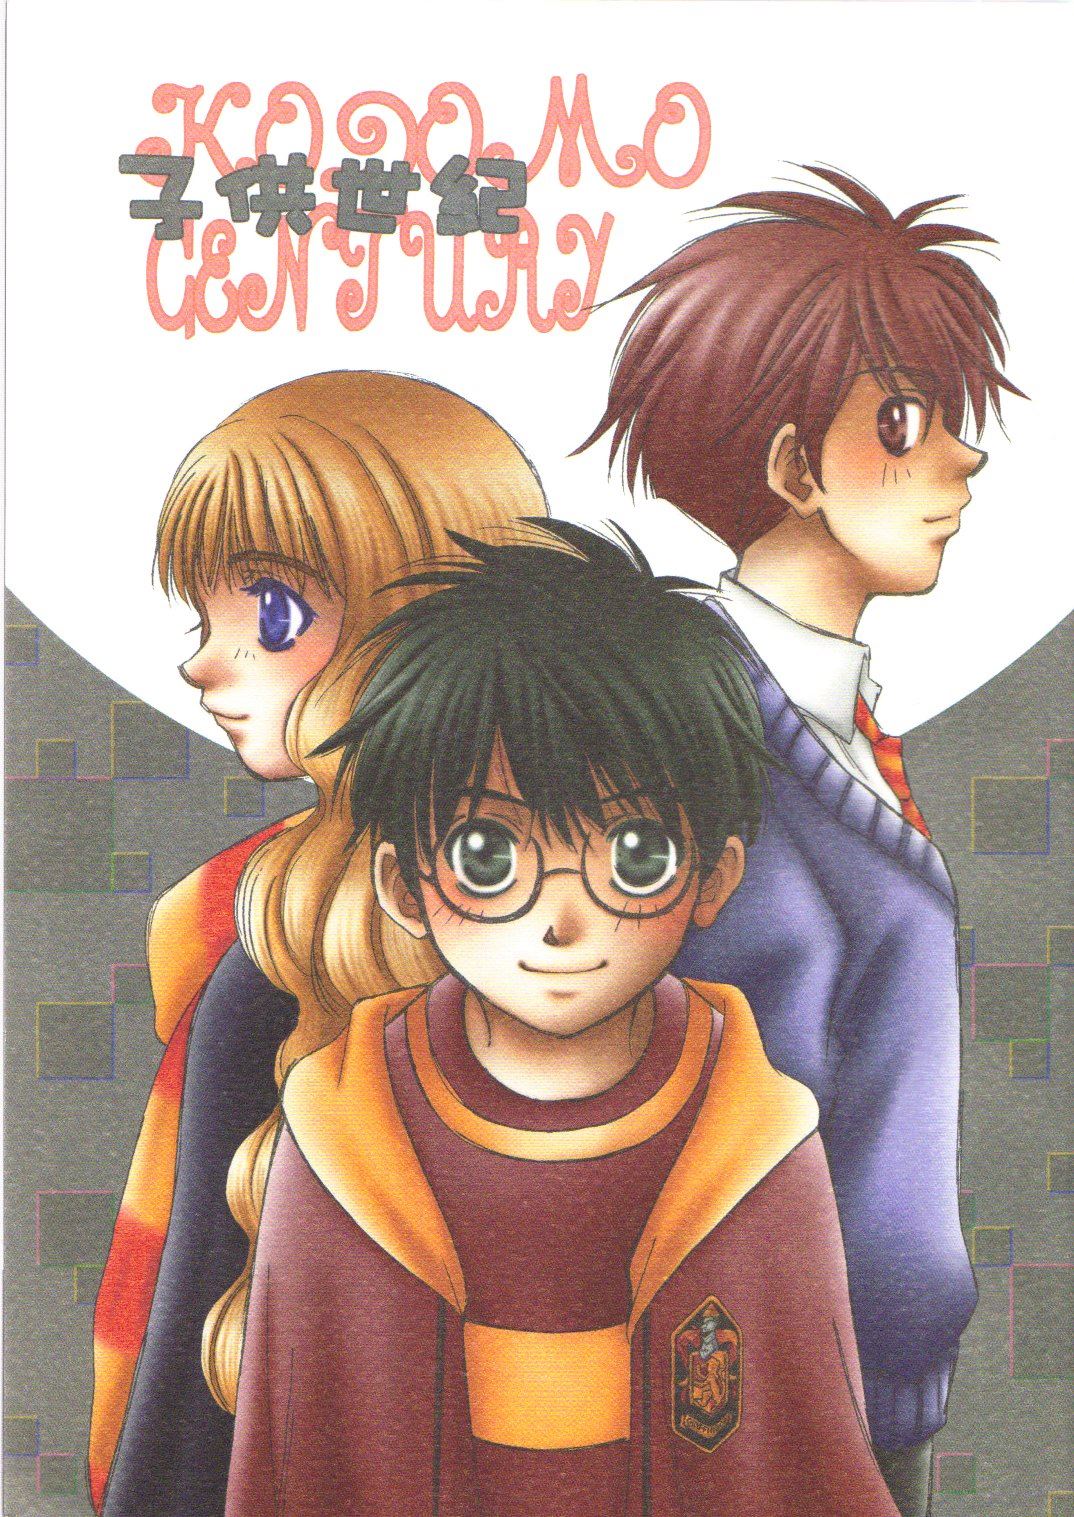 Warau Datenshi Shinora Sakami Kodomo Century Harry Potter English persepolis130 00